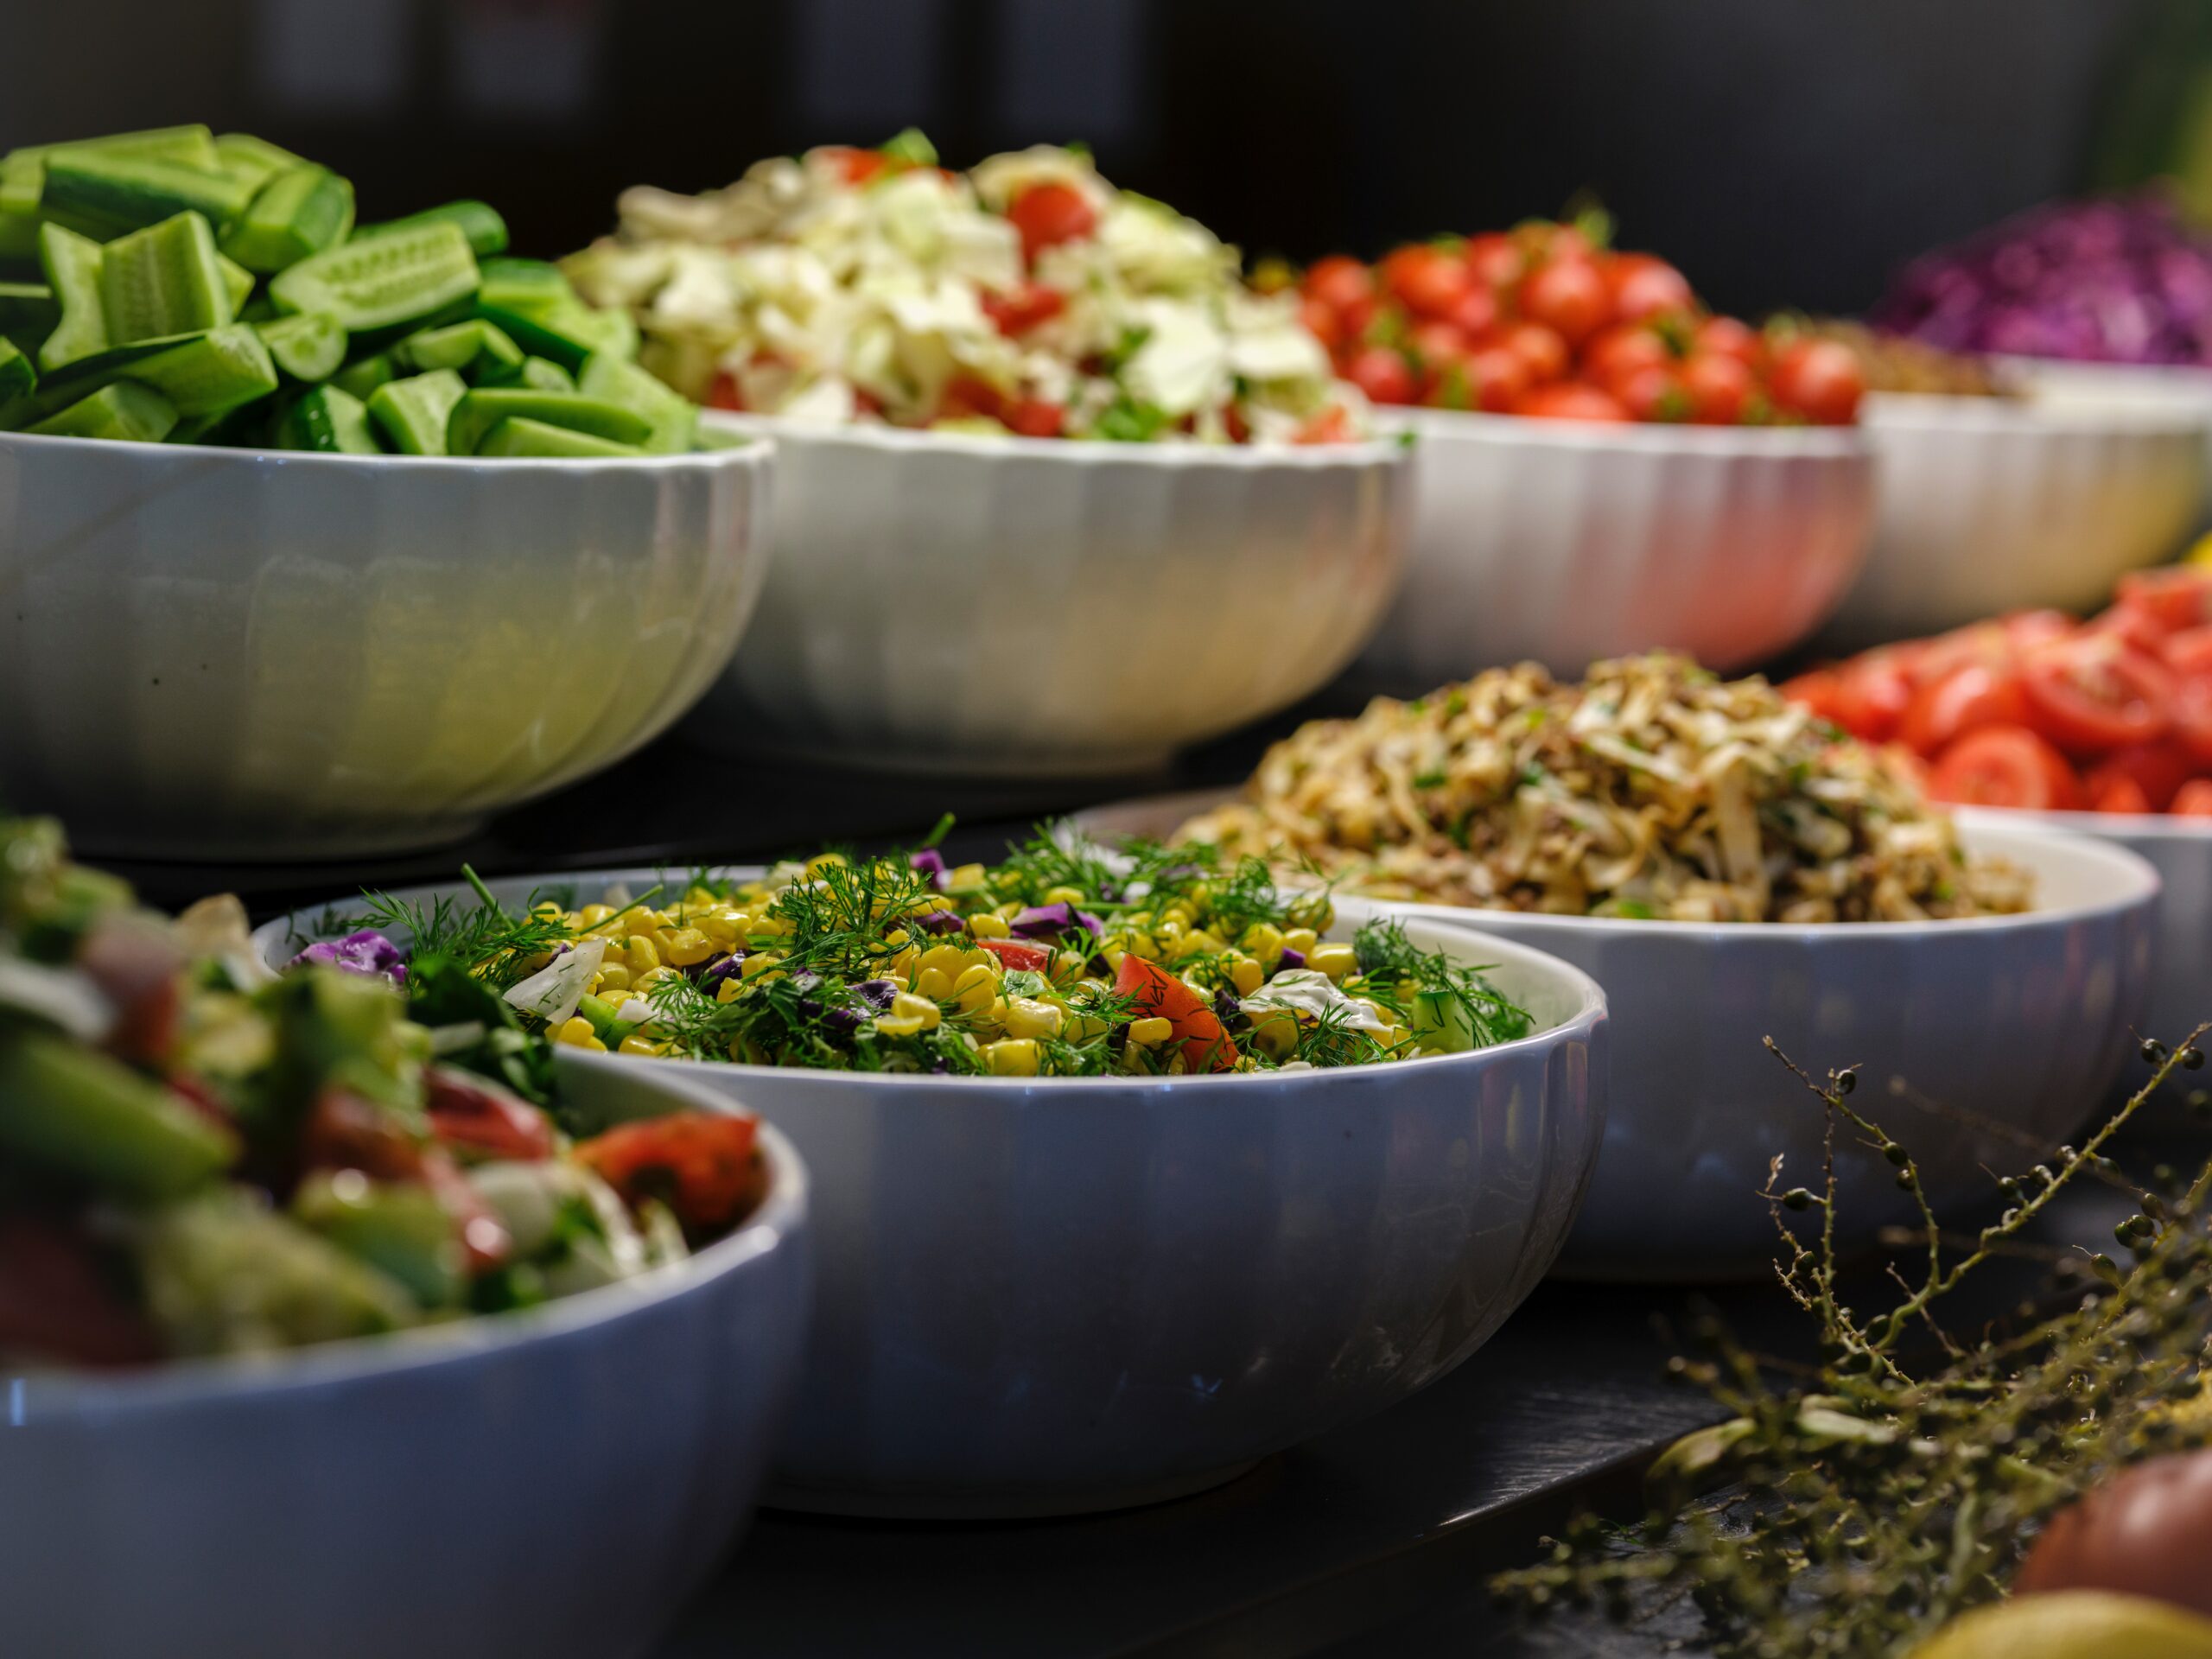 Church Ladies’ Favorite Potluck Recipes: Salads